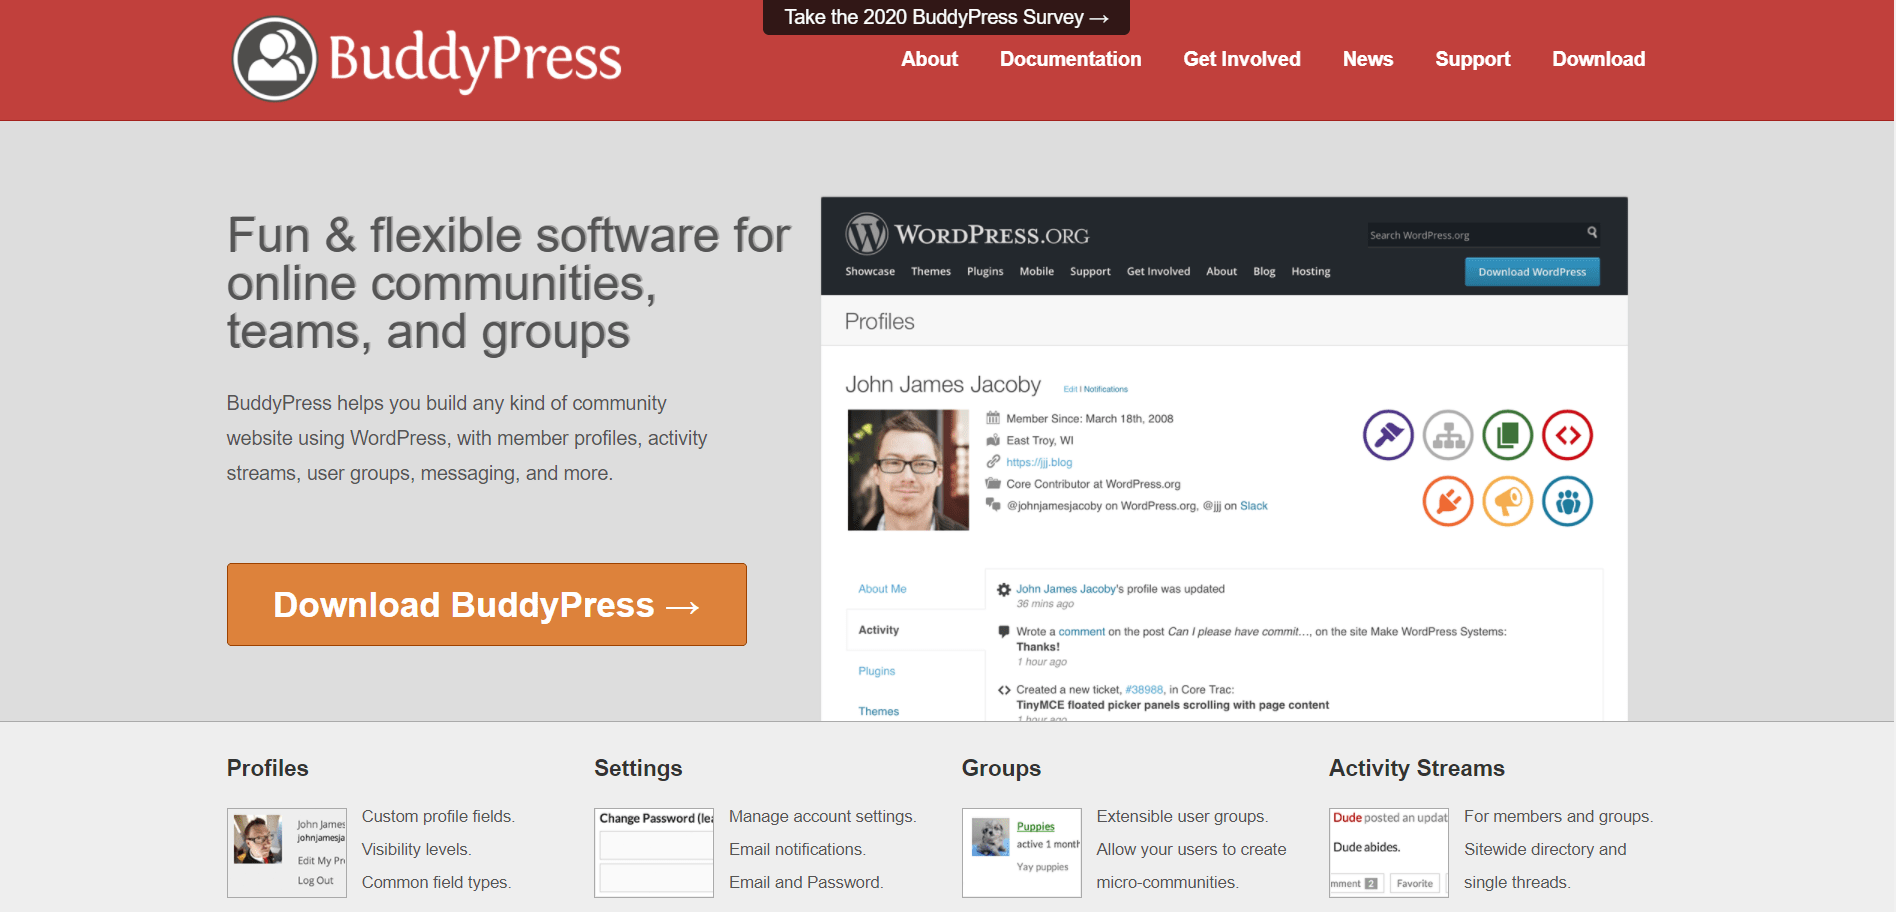 BuddyPress Overview